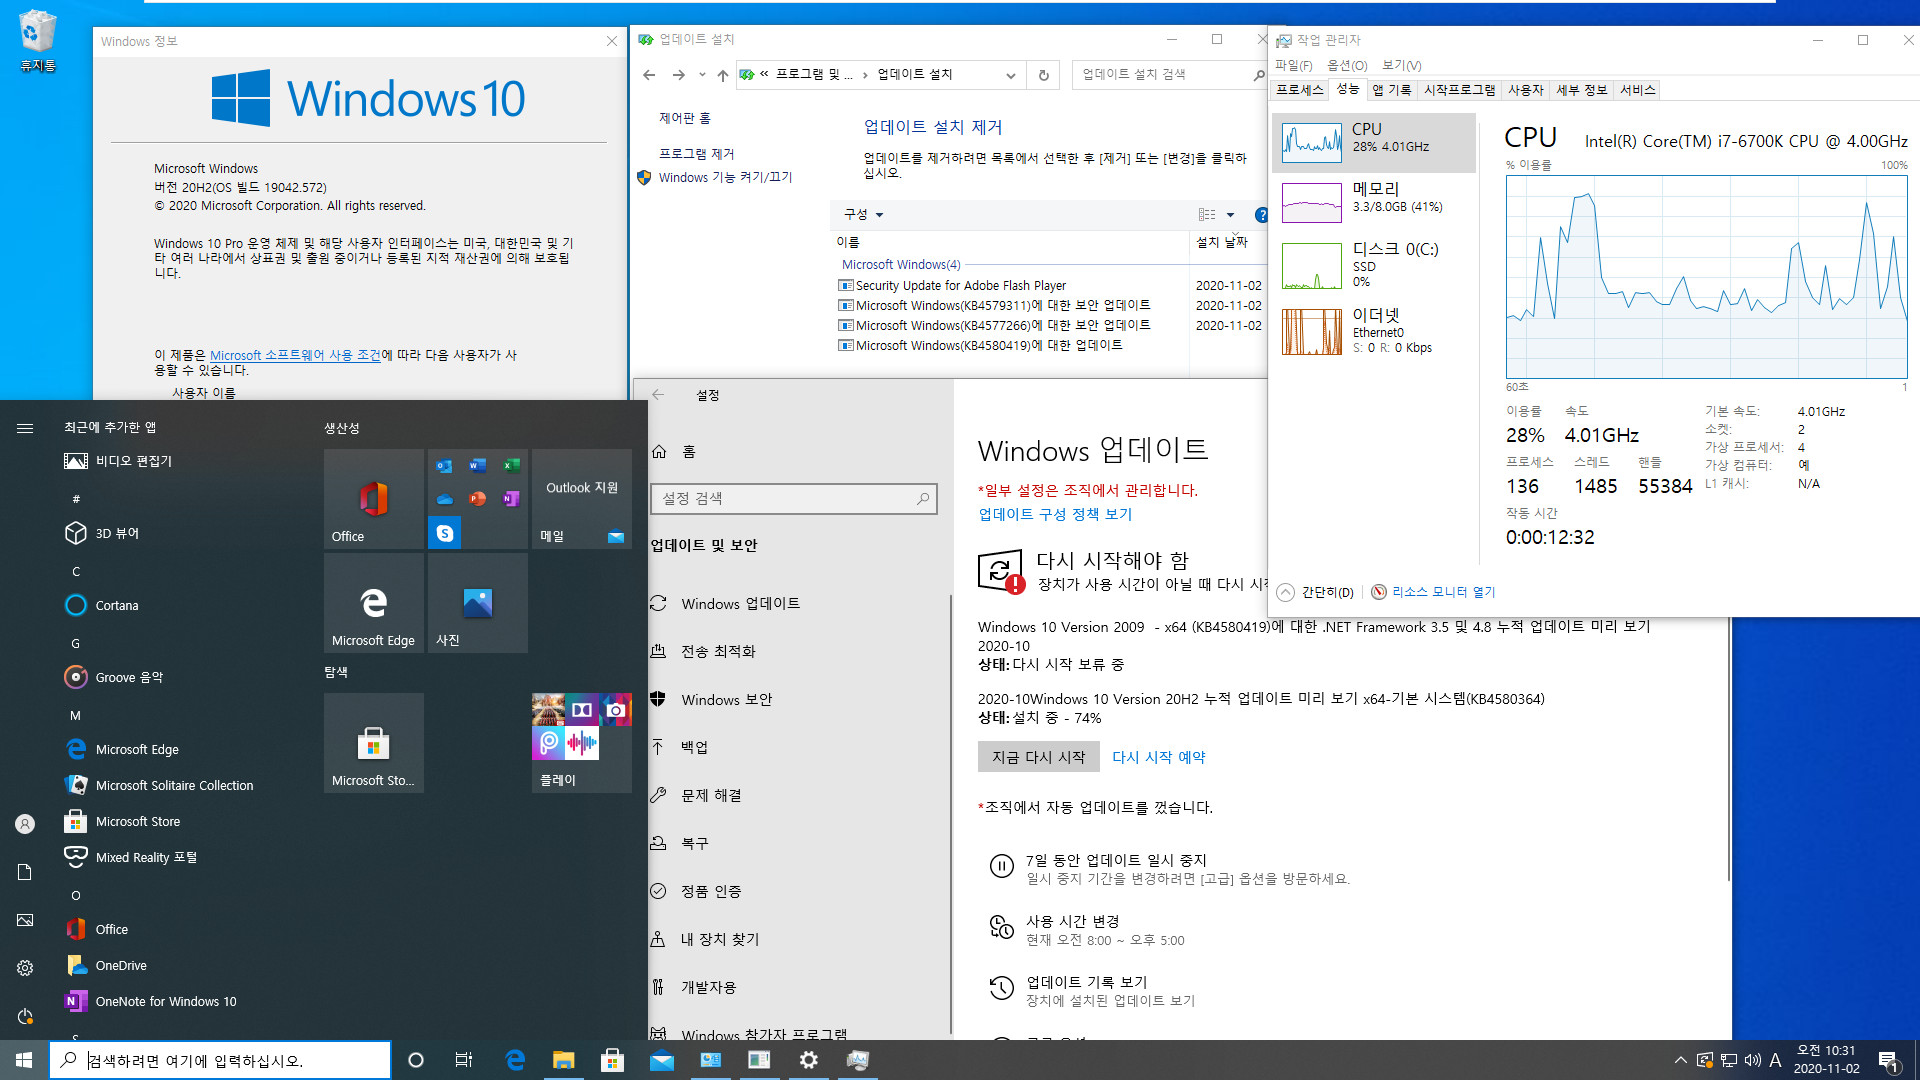 Windows 10 버전 20H2 기능 업데이트 KB4562830 폴더의 mum 파일들만 찾아서 설치하기.bat - 크로미엄 엣지 설치하지 않고 버전 20H2만 설치하기 테스트 - 뻘짓했네요 2020-11-02_103130.jpg